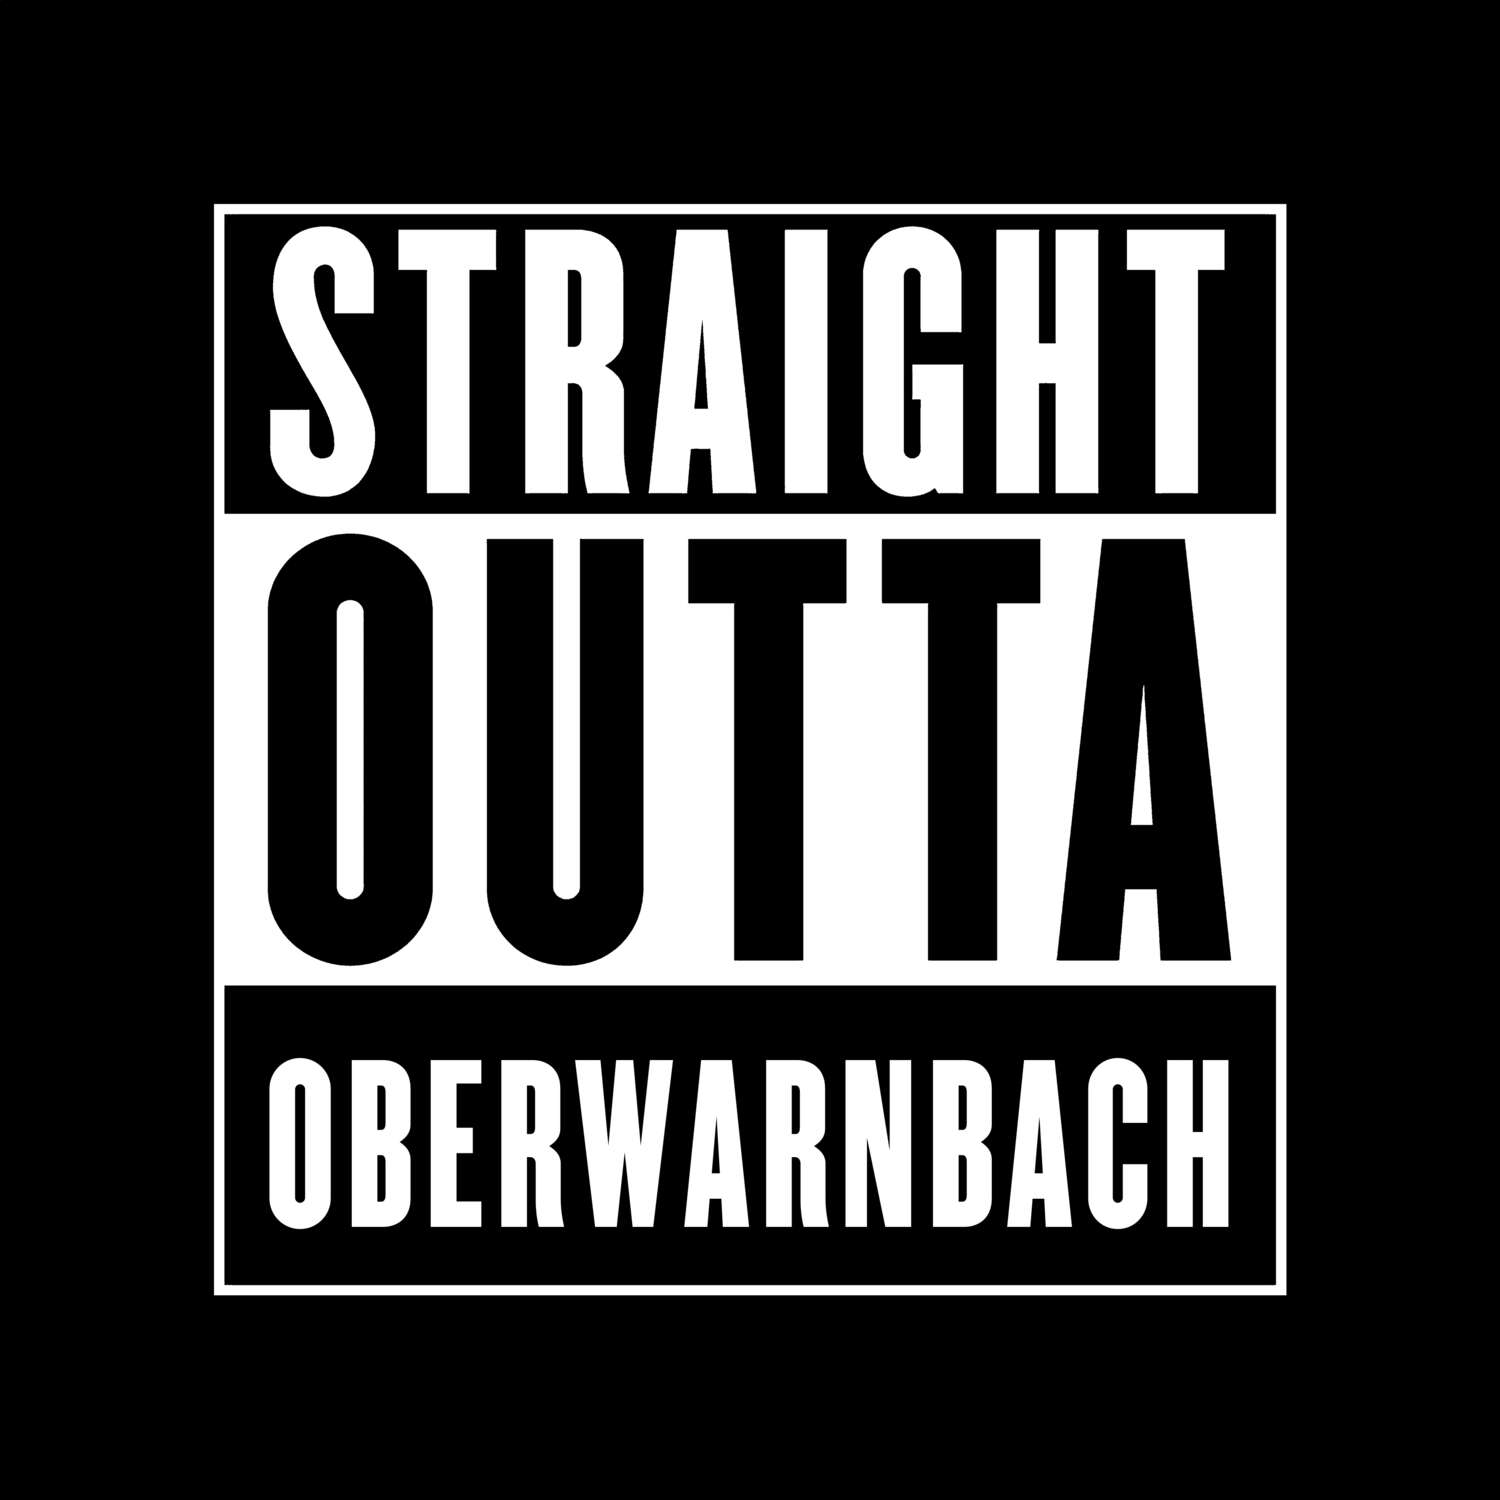 Oberwarnbach T-Shirt »Straight Outta«